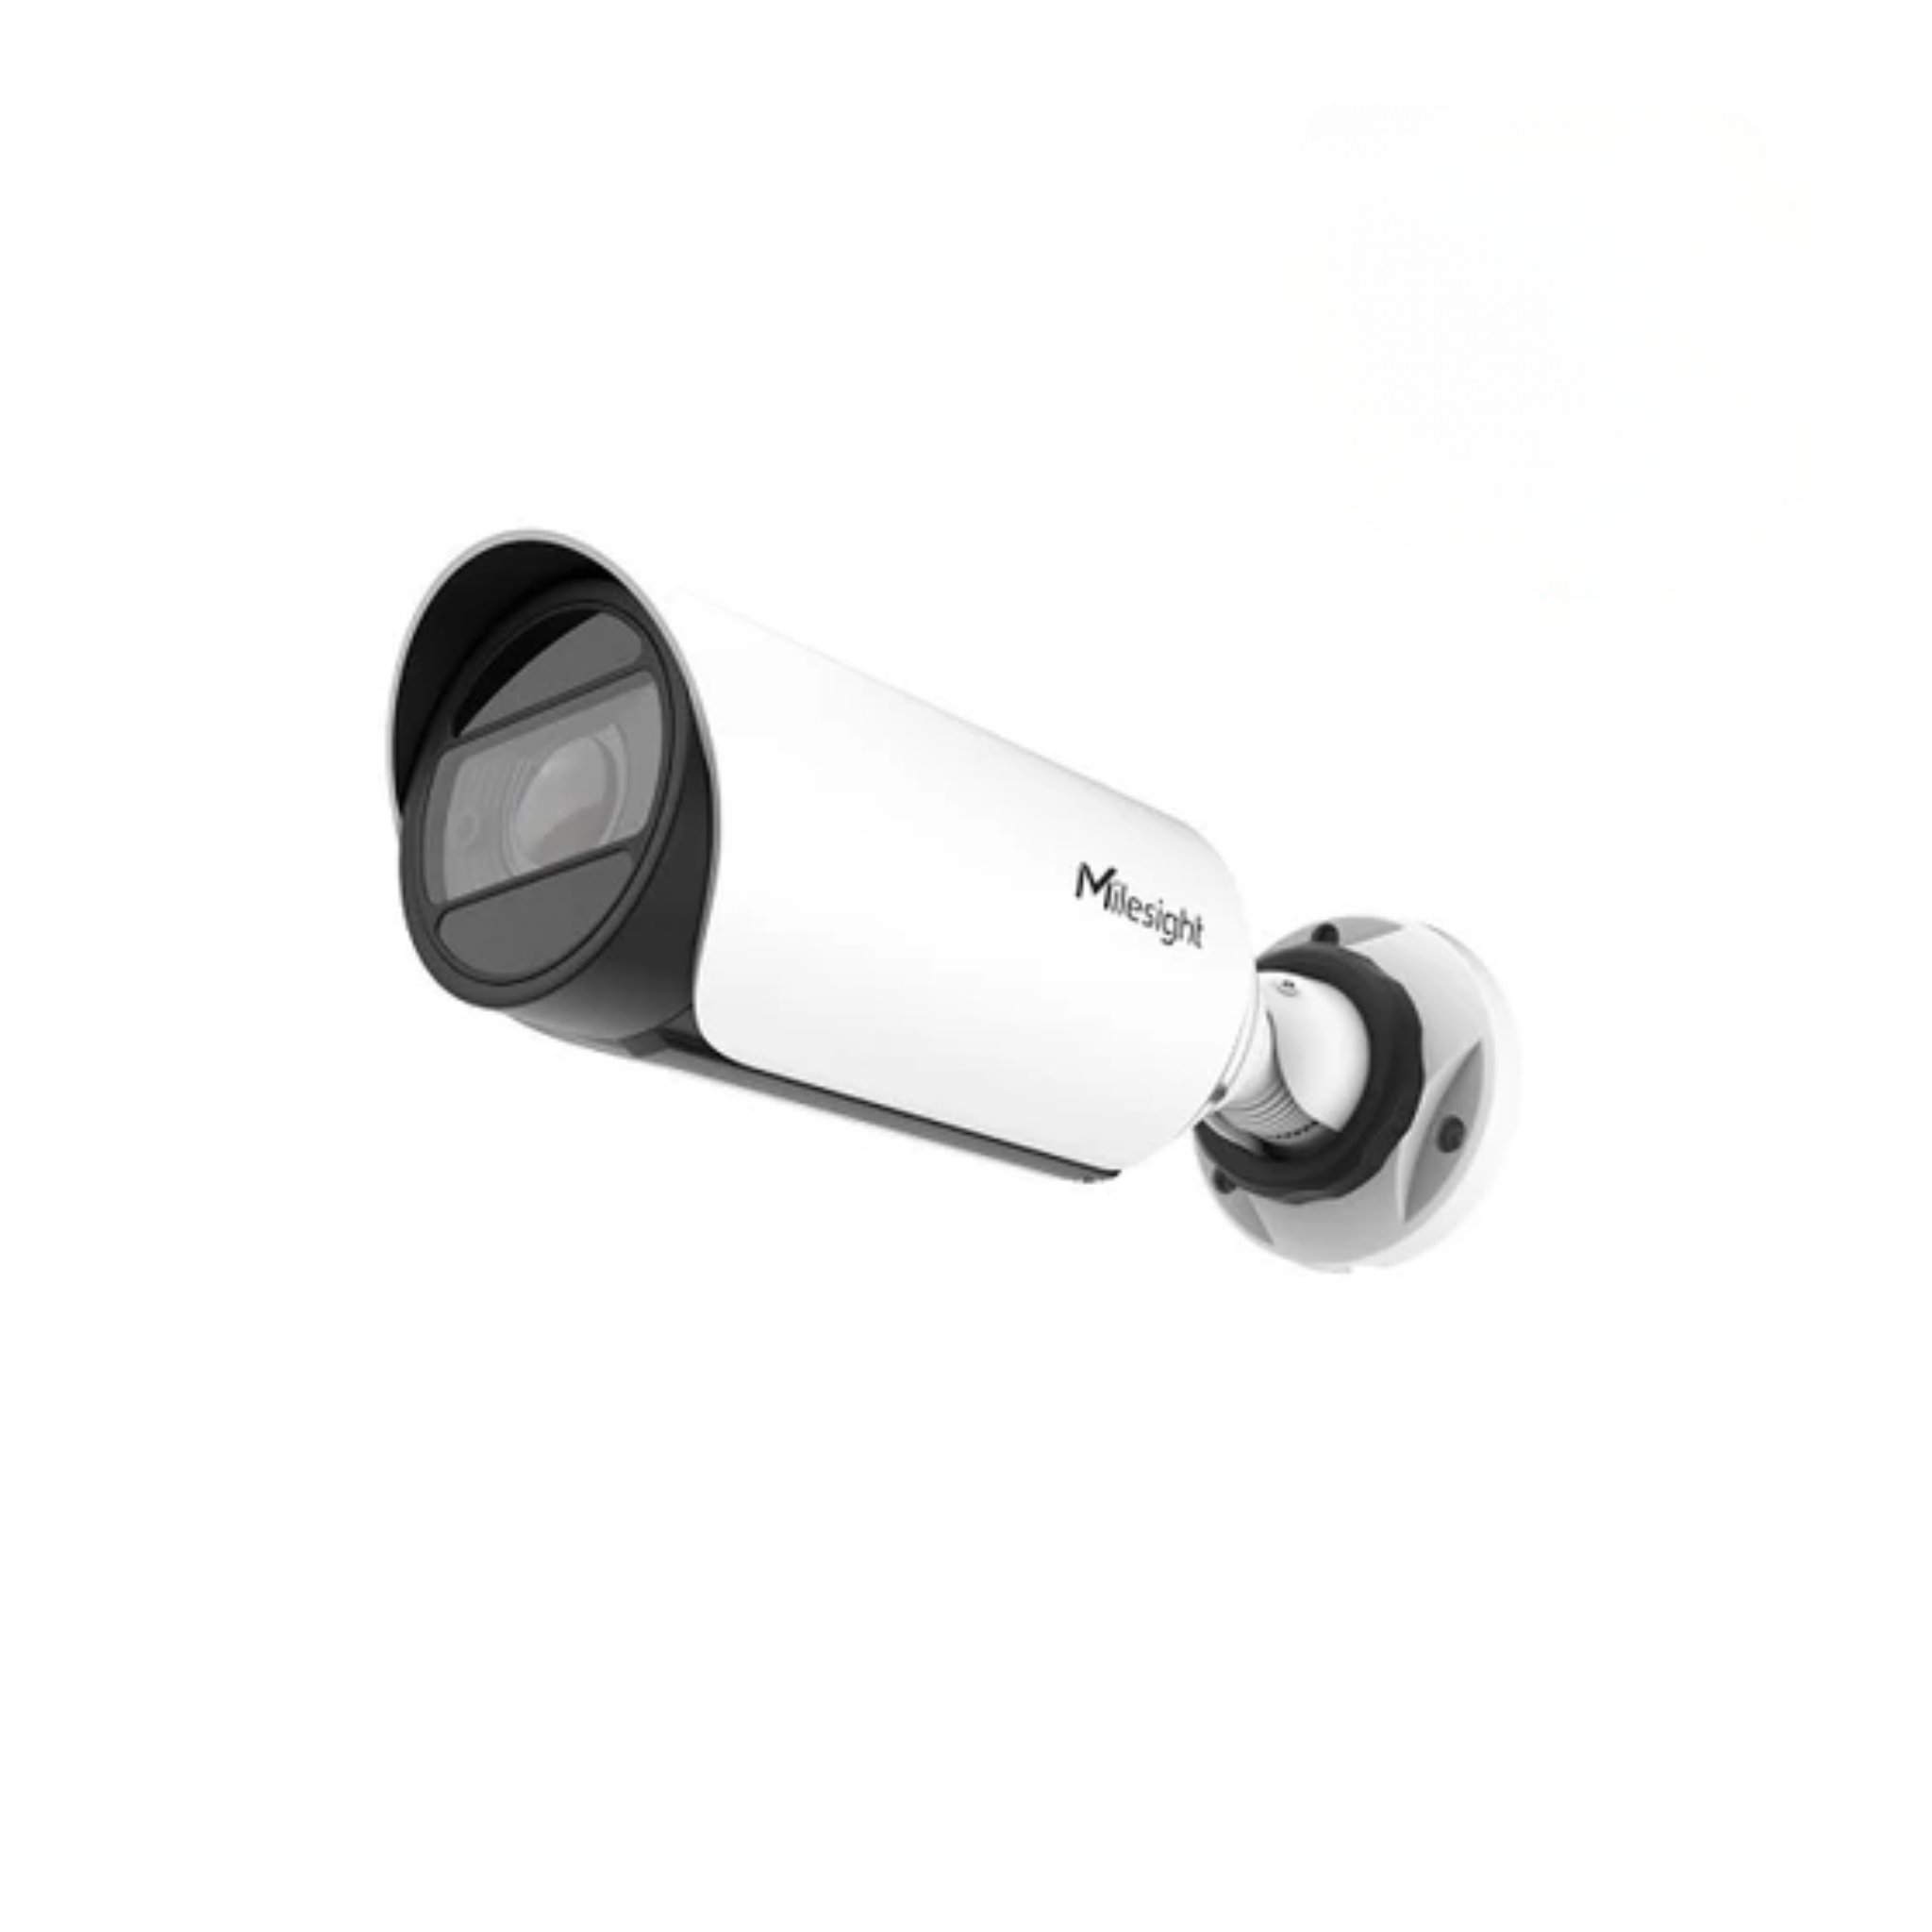 NDAA Mini Bullet 5MP Camera with Motorized AI Zoom Lens for Enhanced Surveillance